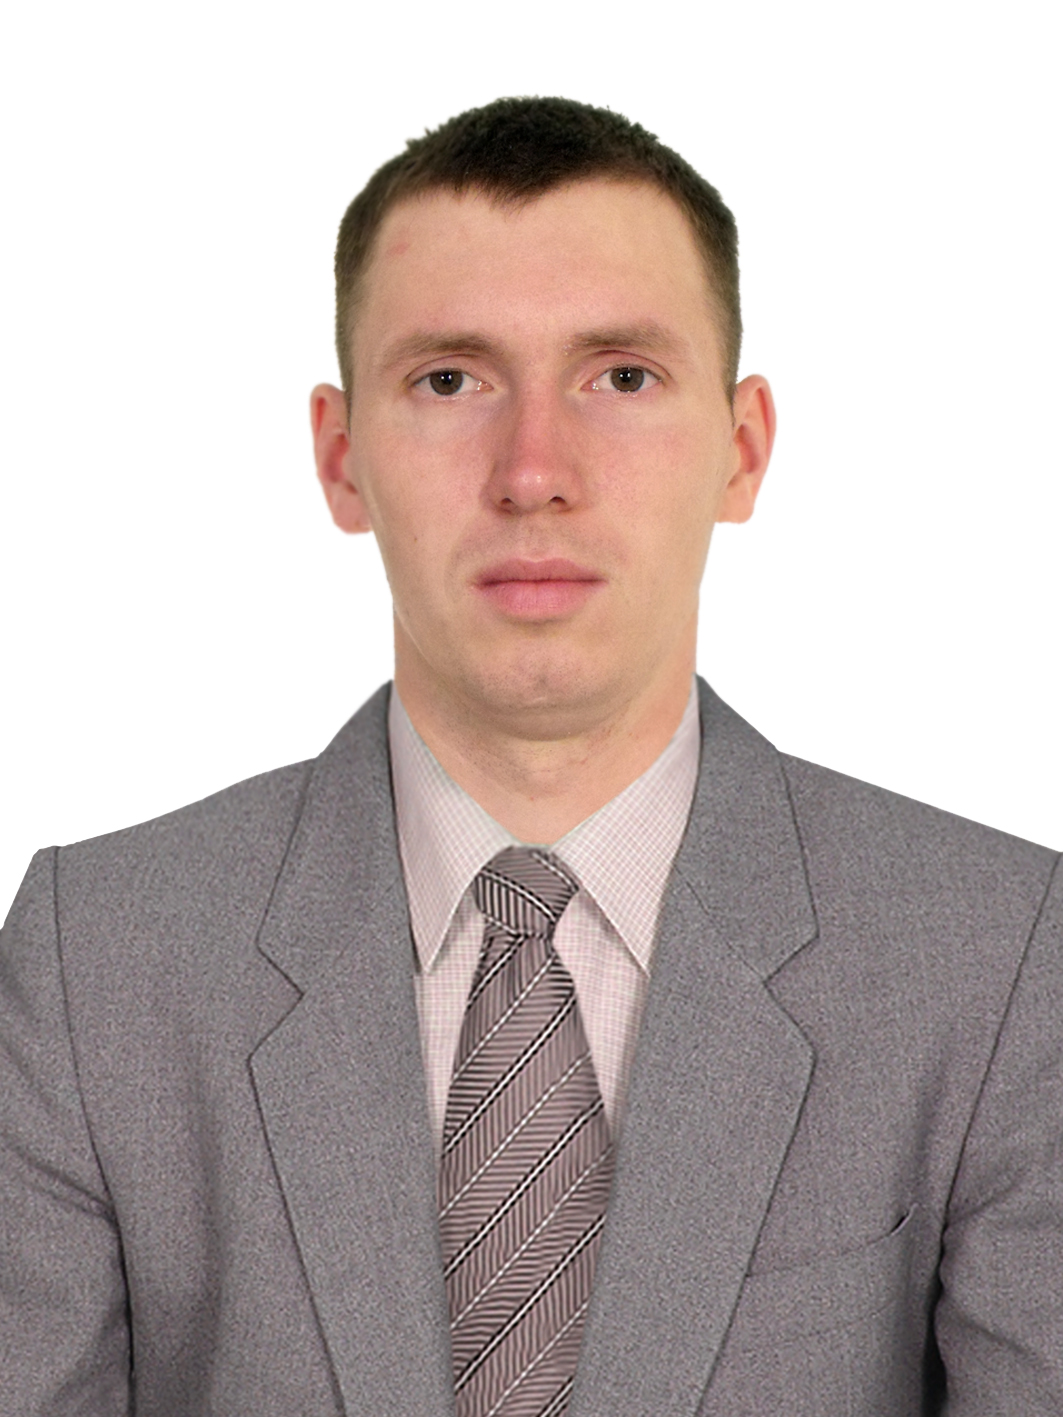                         Kipreev Sergey
            